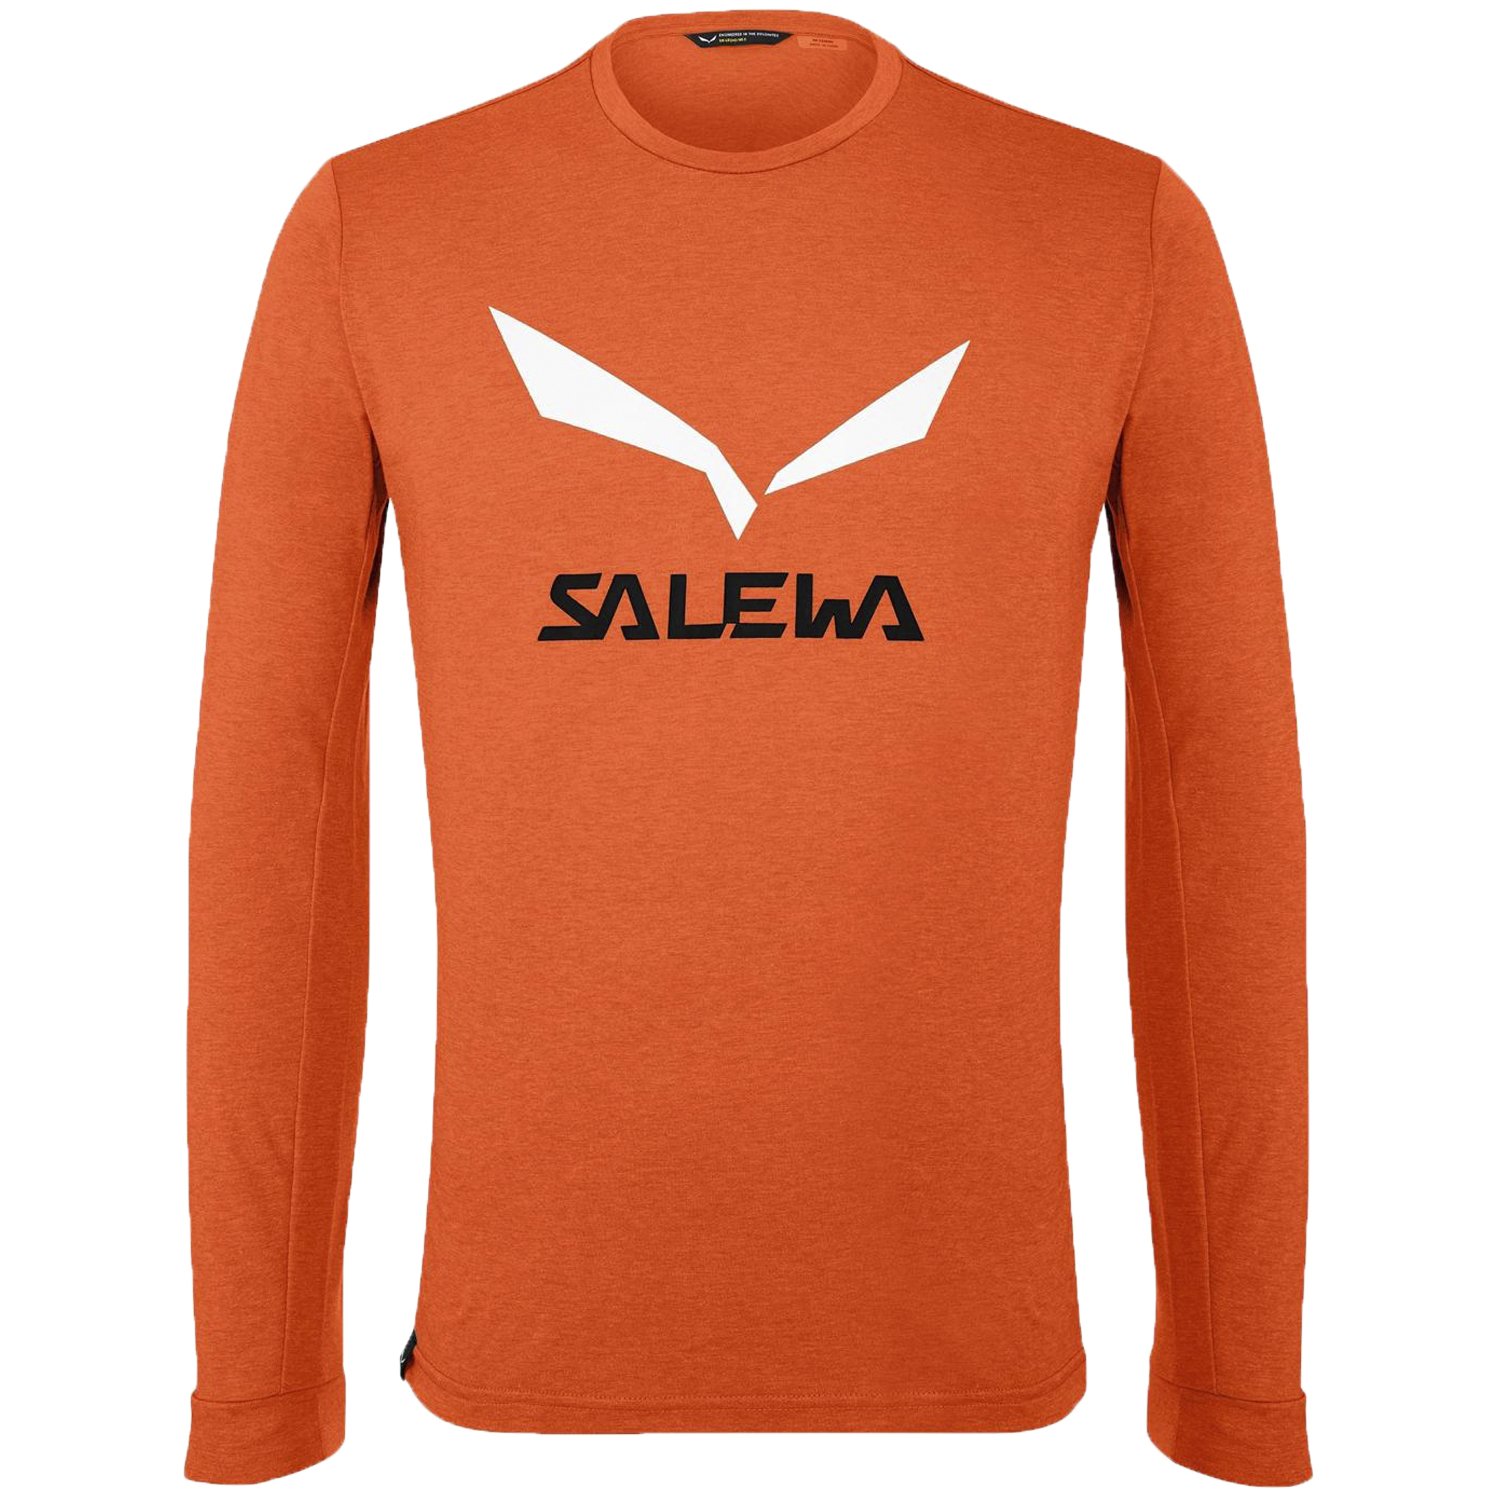 Футболка Salewa Solidlogo Dry Men's L/S Tee Red Orange Melange, с длинным рукавом, мужская, 00-0000027340_4156 mjolk футболка с длинным рукавом собачки